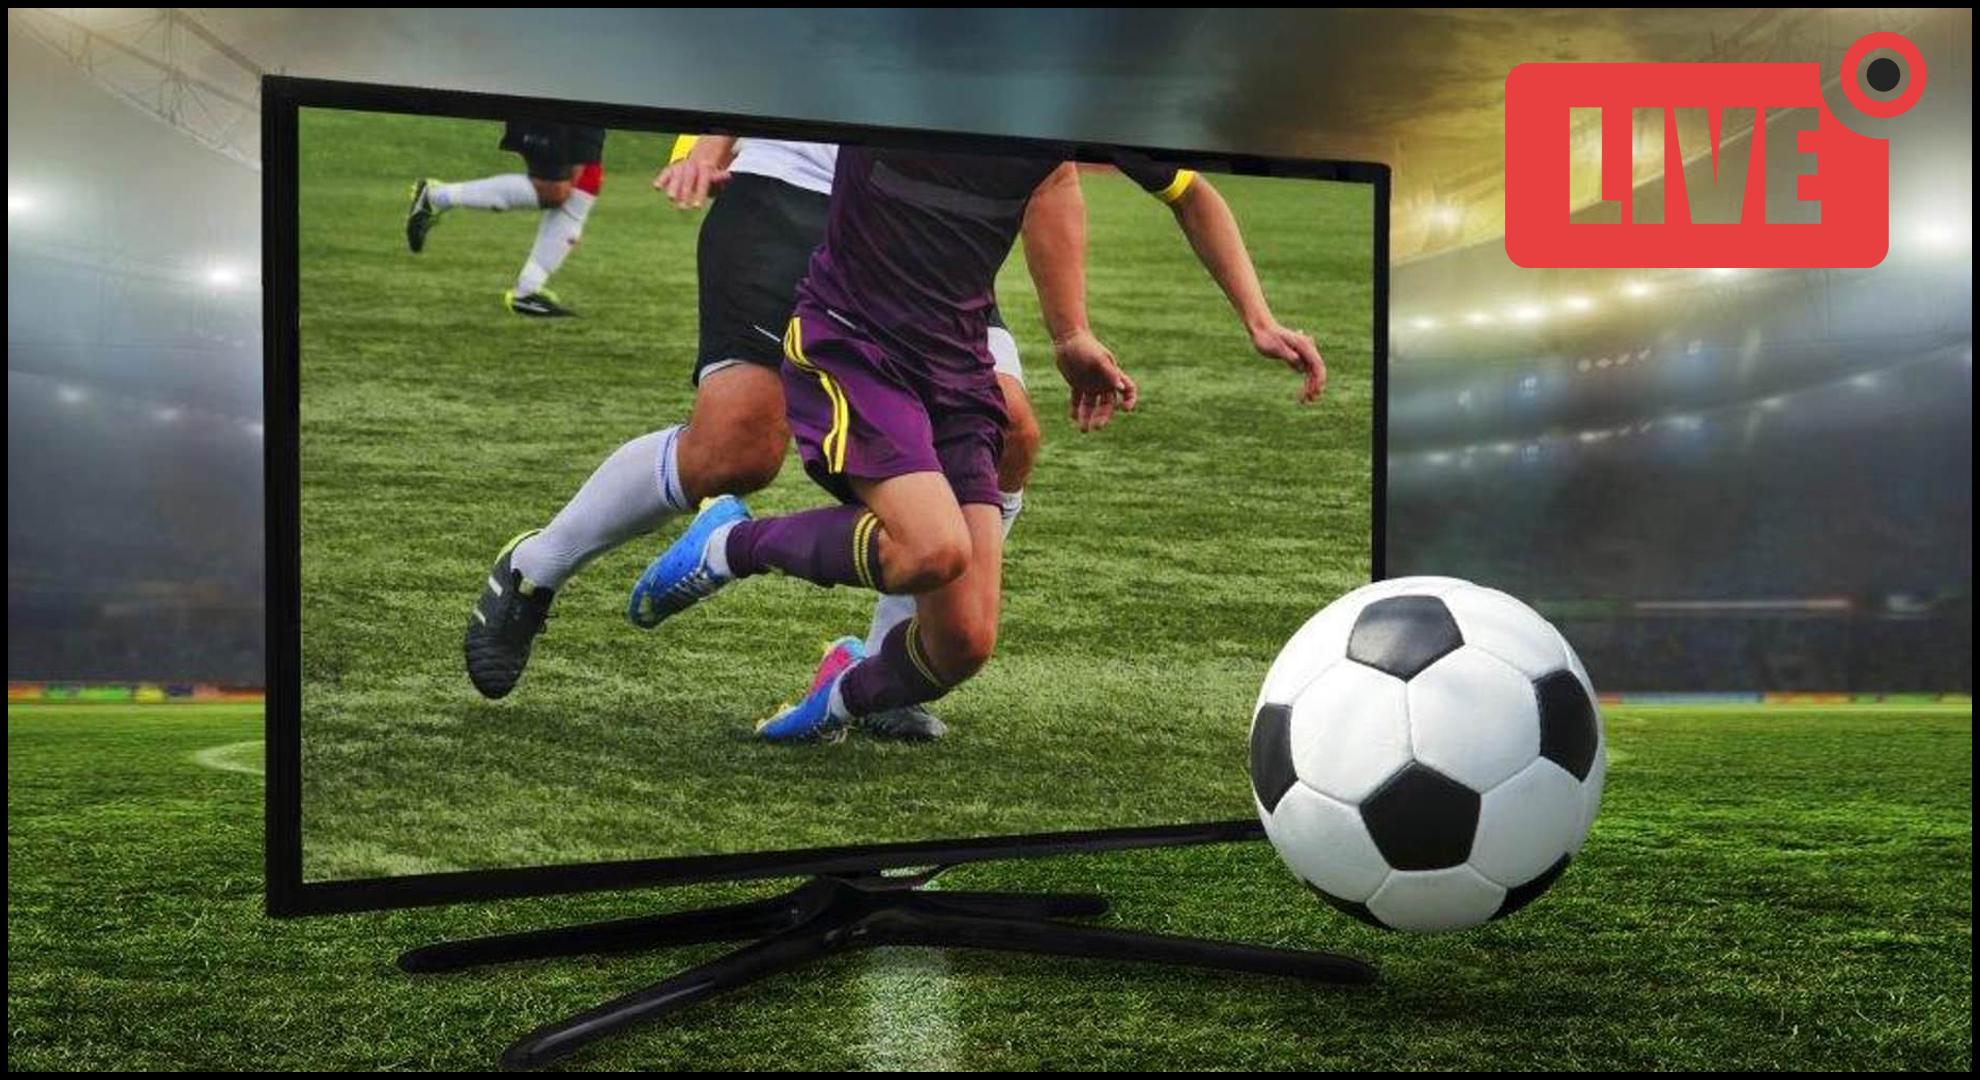 Do you sport on tv. Телевизор футбол. Футбол на экране. Трансляция футбола на большом экране. Футбол на большом телевизоре.